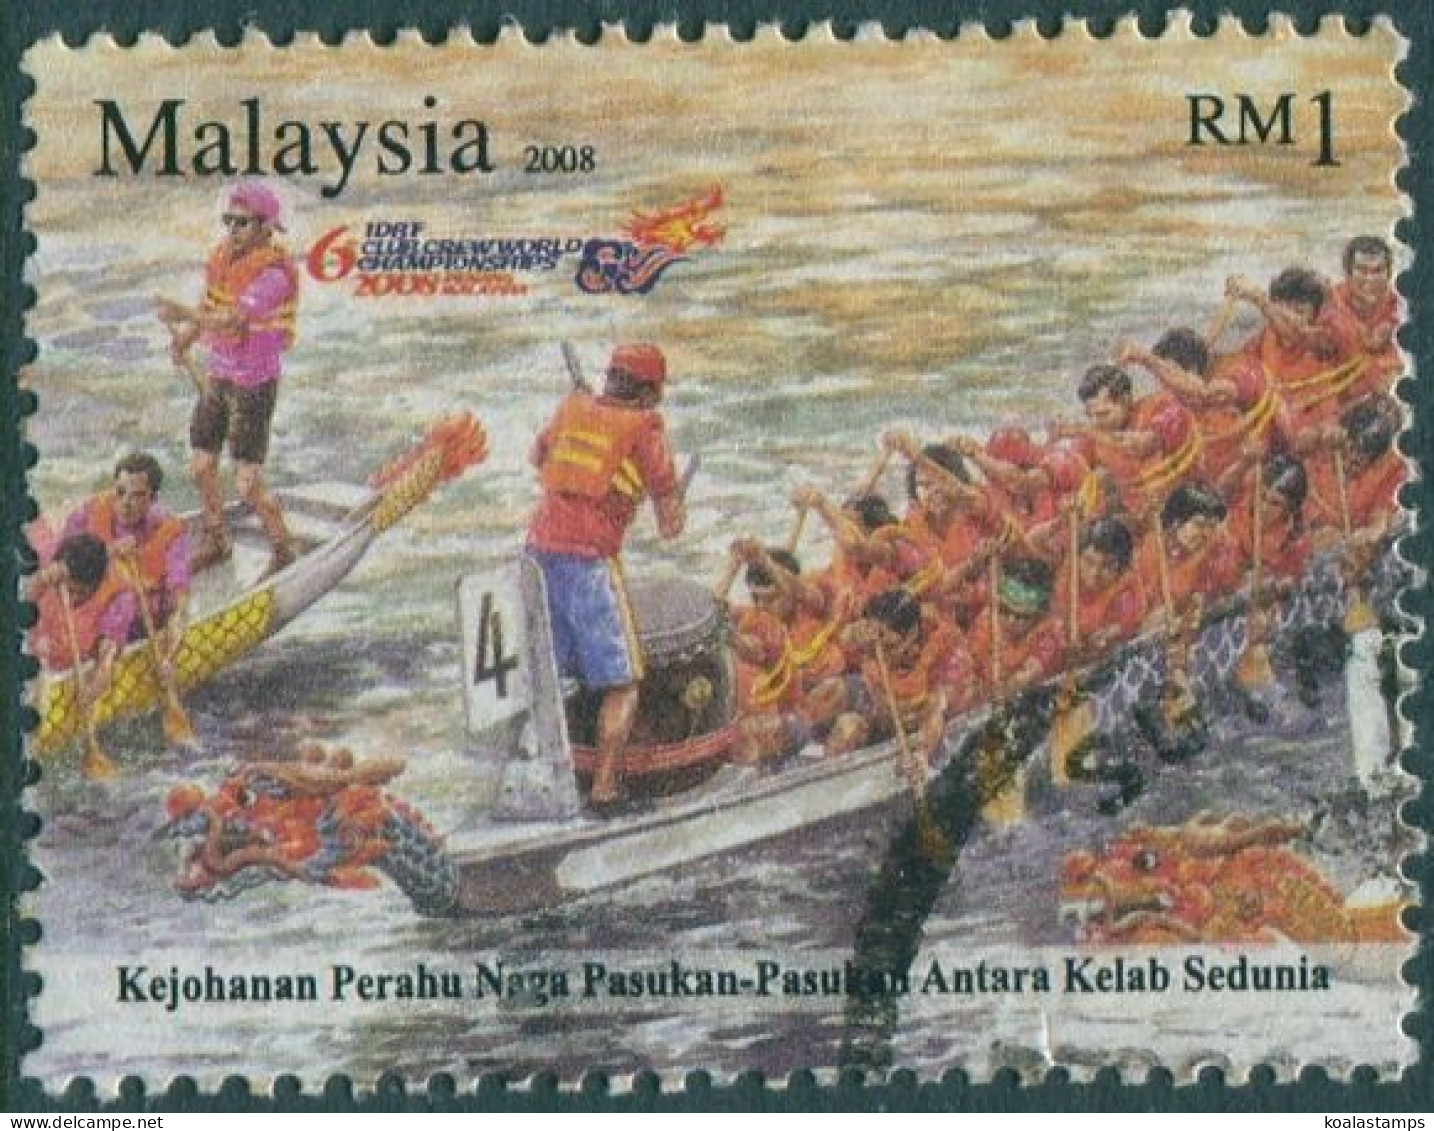 Malaysia 2008 SG1498 $1 Dragon Boats FU - Malaysia (1964-...)